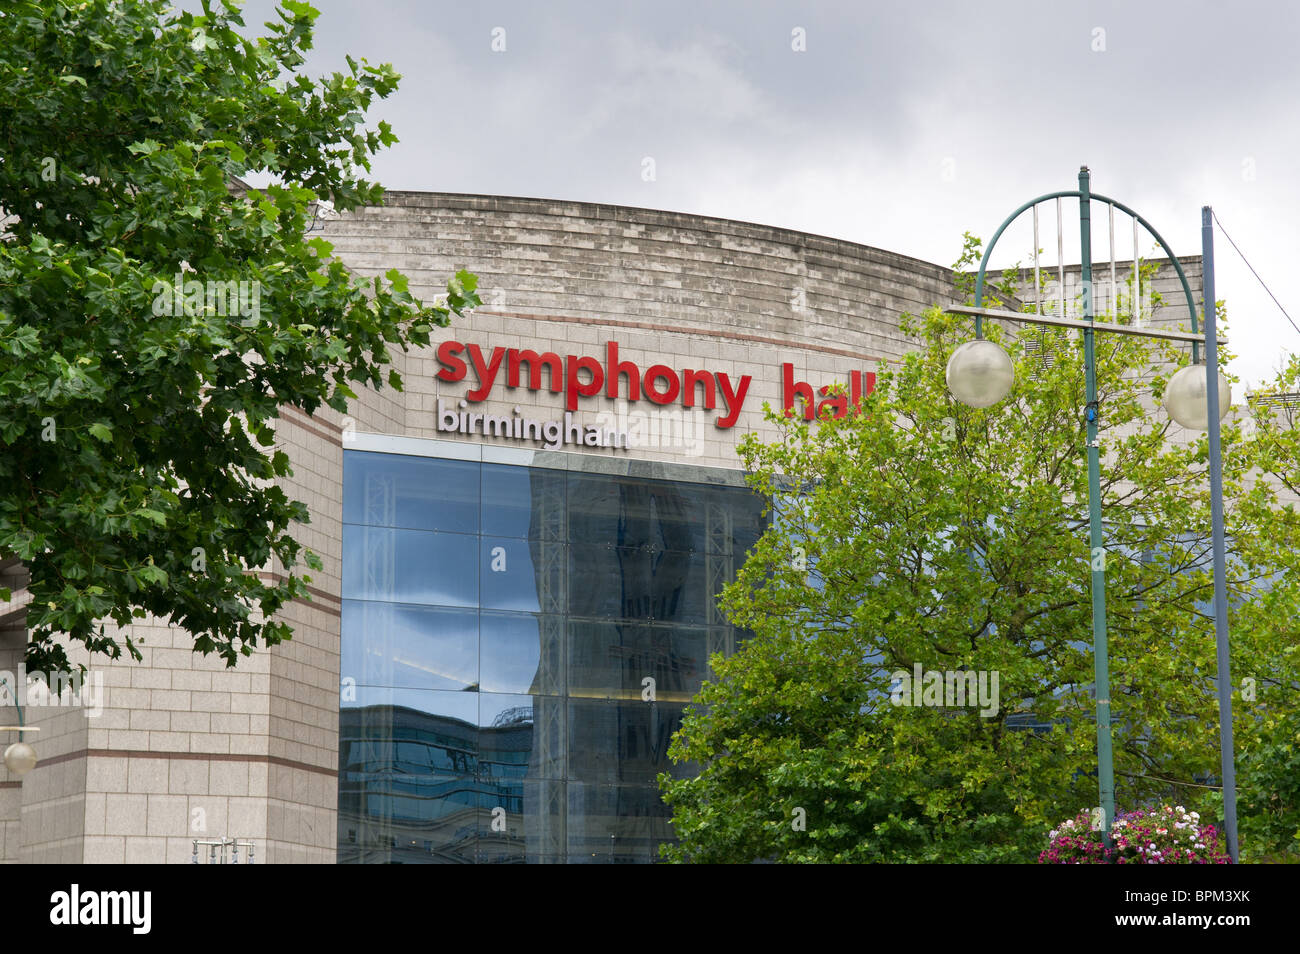 Centenary Square, Birmingham. The International Conference Centre, Symphony Hall. Stock Photo